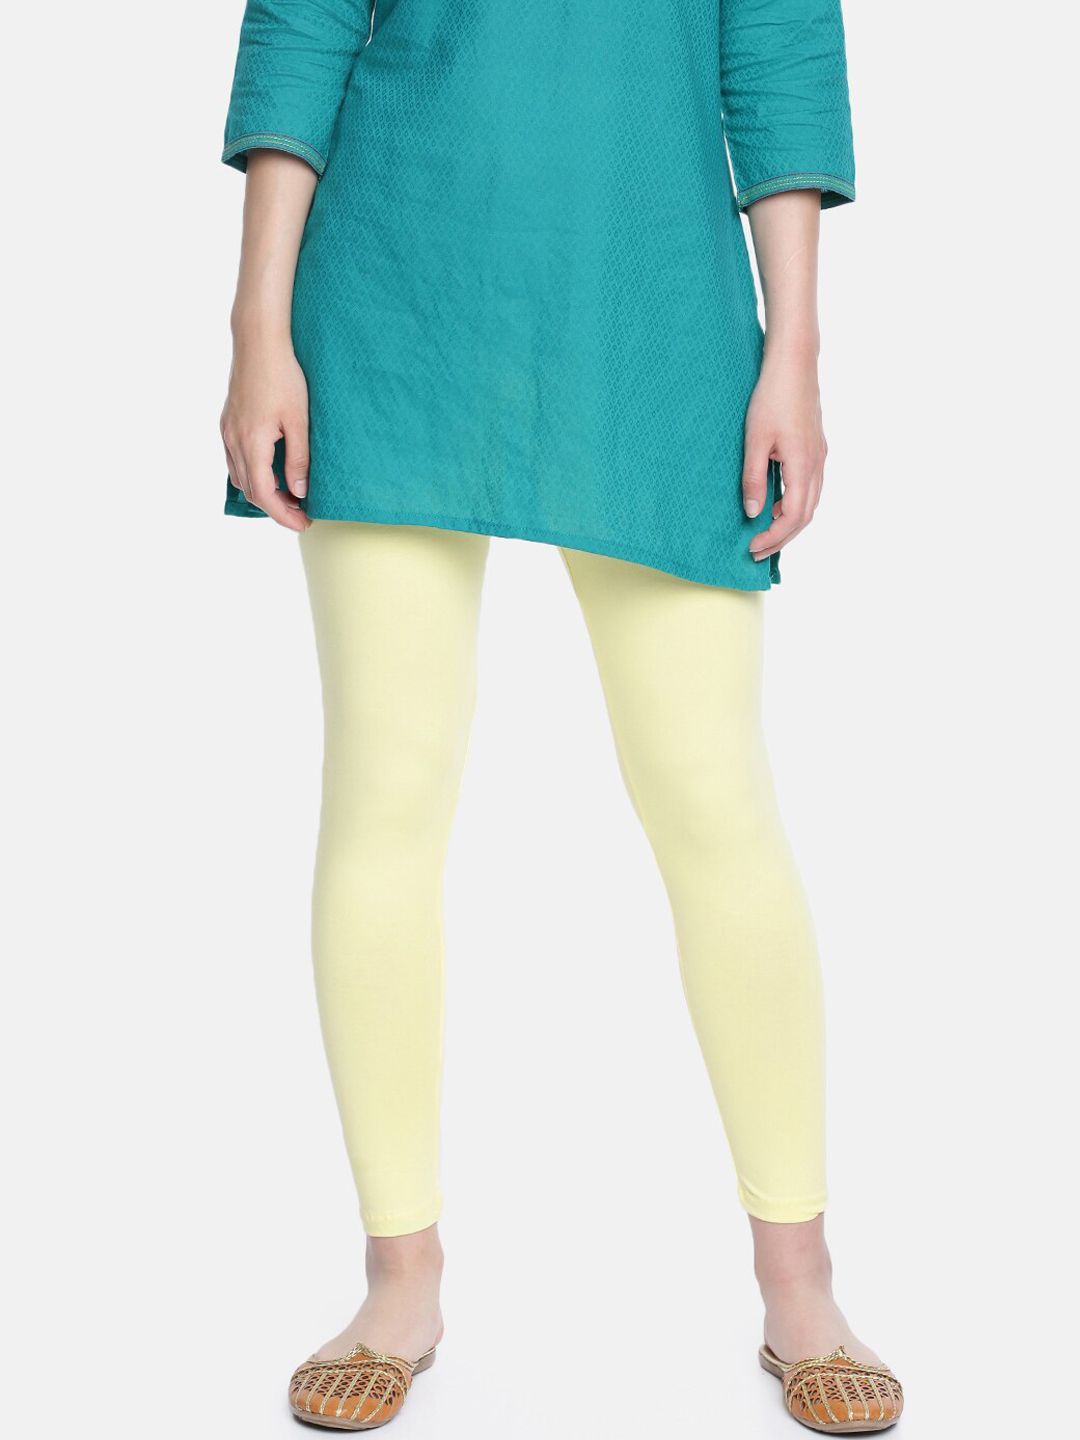 Dollar Missy Lime Green Slim Fit Ankle Length Leggings Price in India